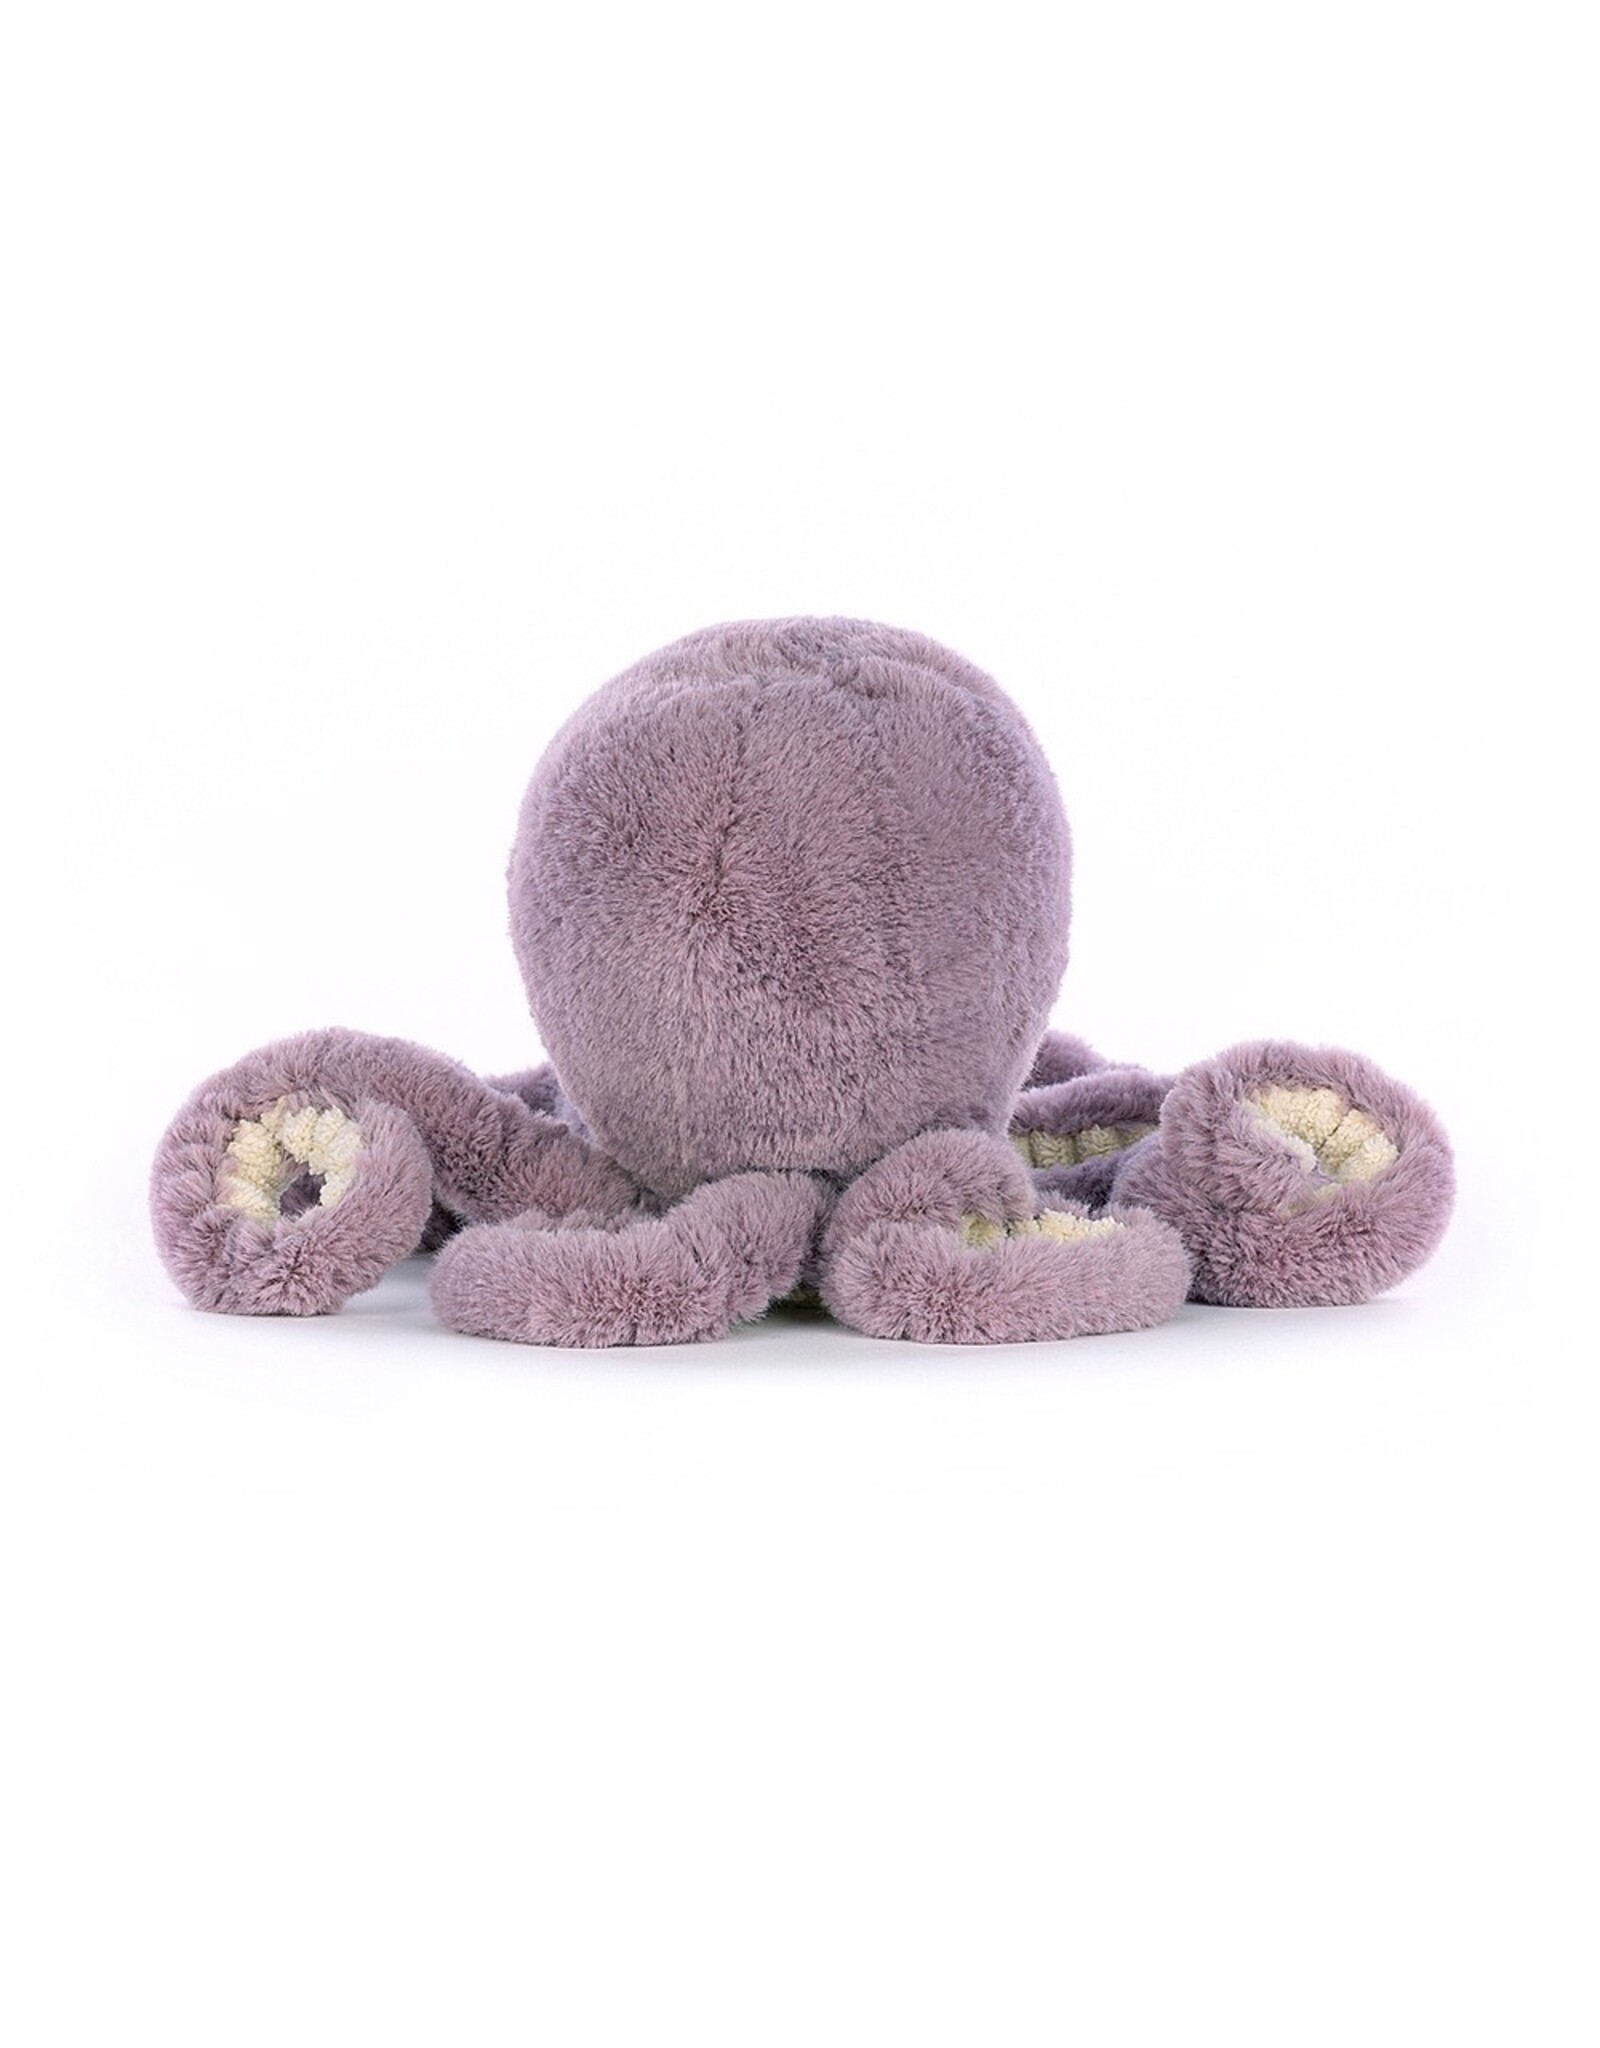 Jellycat Maya - Octopus Little